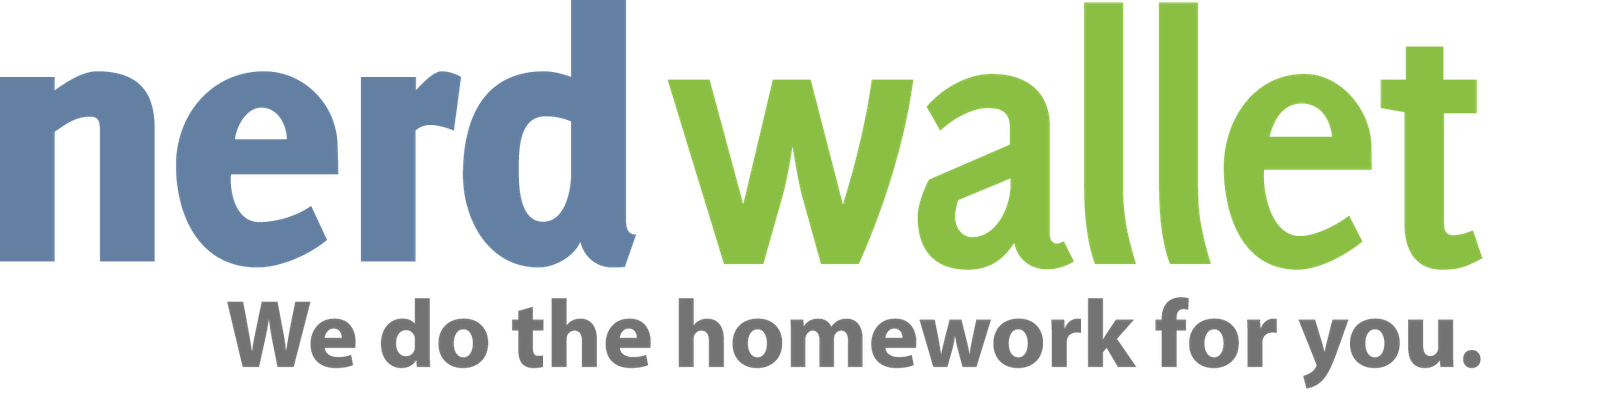 NerdWallet Logo - Nerd Wallet Logo